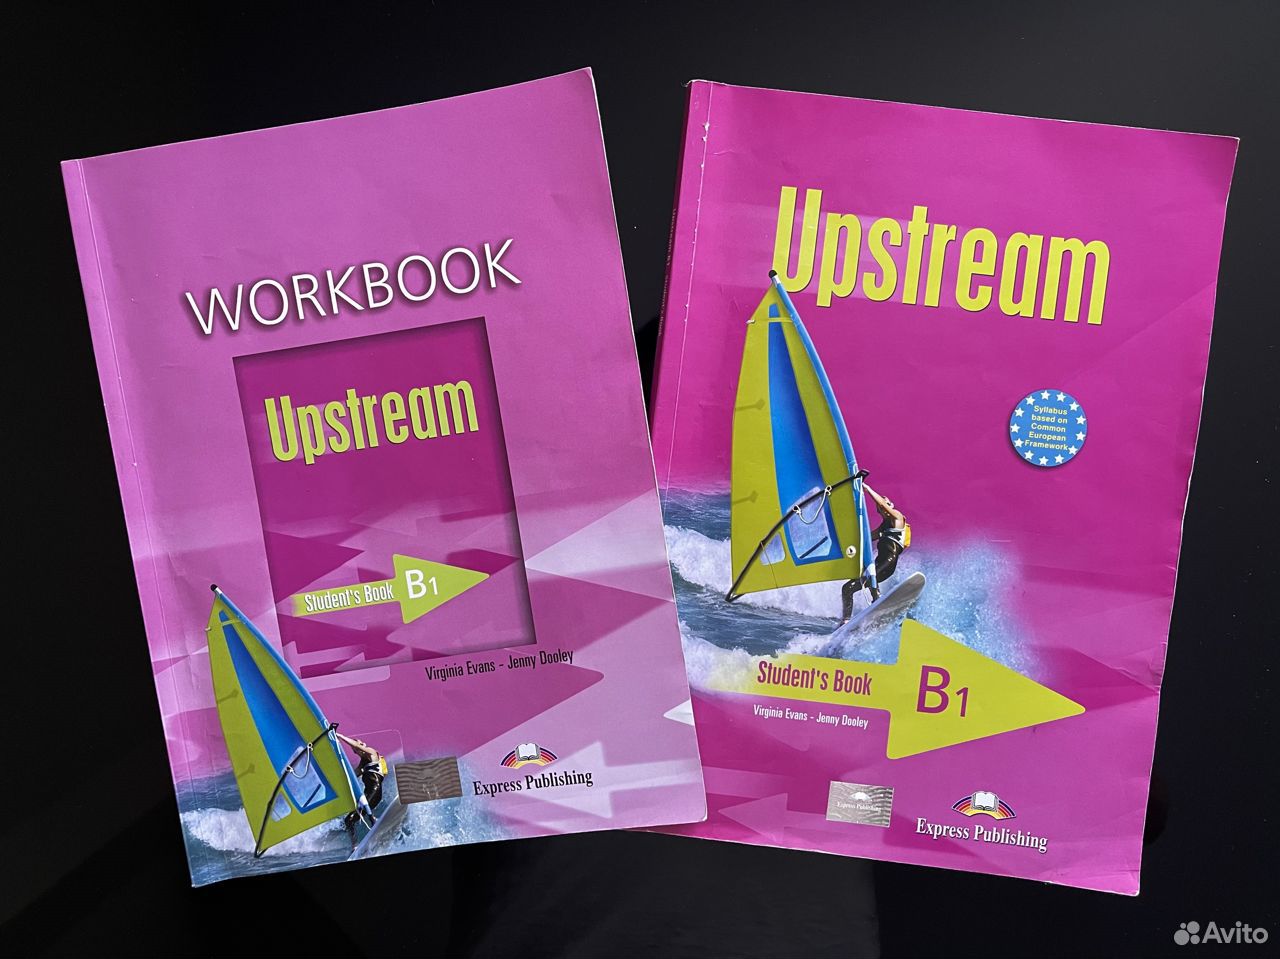 Upstream Workbook. Upstream b1 student's book. Upstream Elementary a2 student's book.